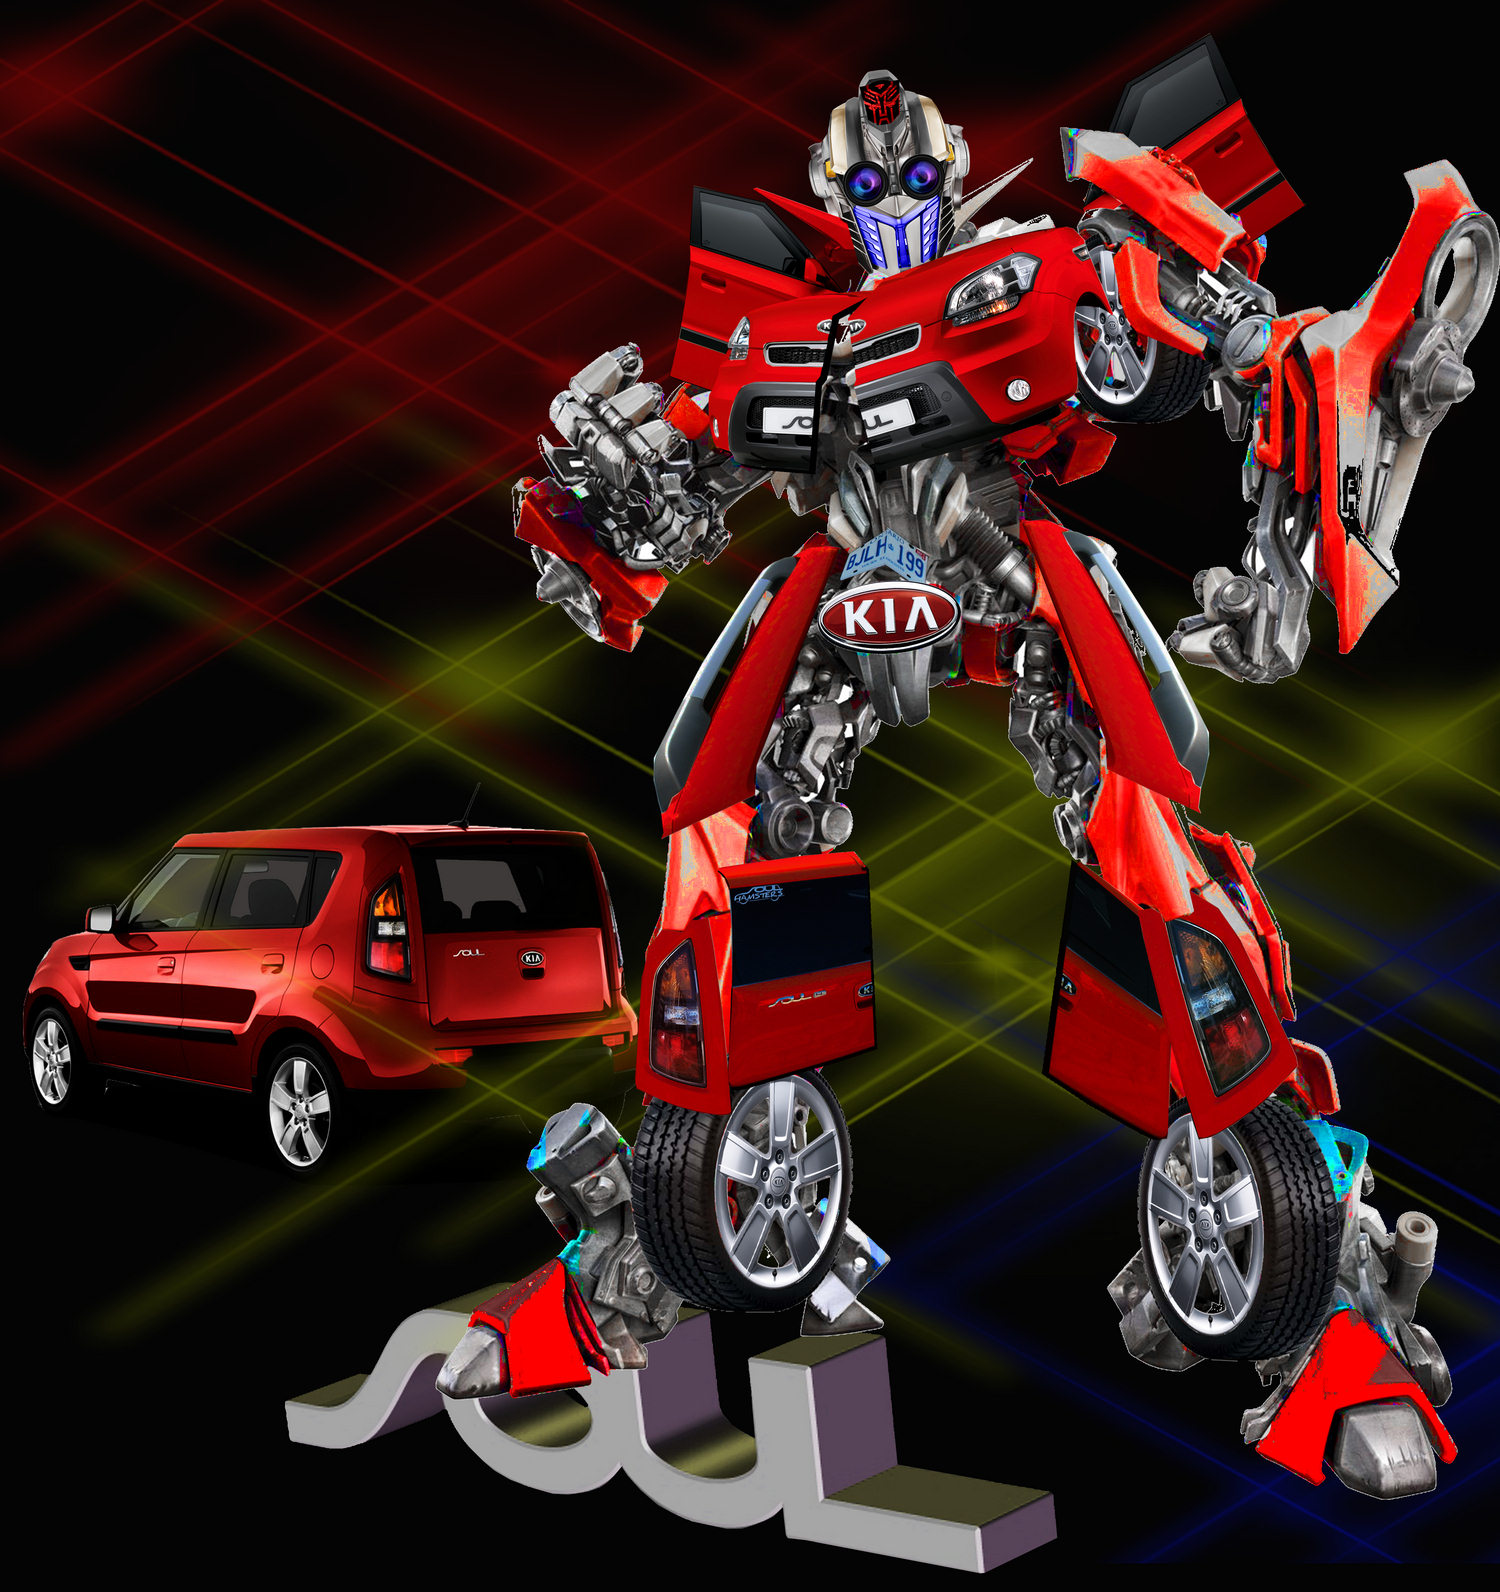 Red transformer. Kia трансформер. Робот трансформер красный. Кий трансформер. Красный трансформер Самурай.